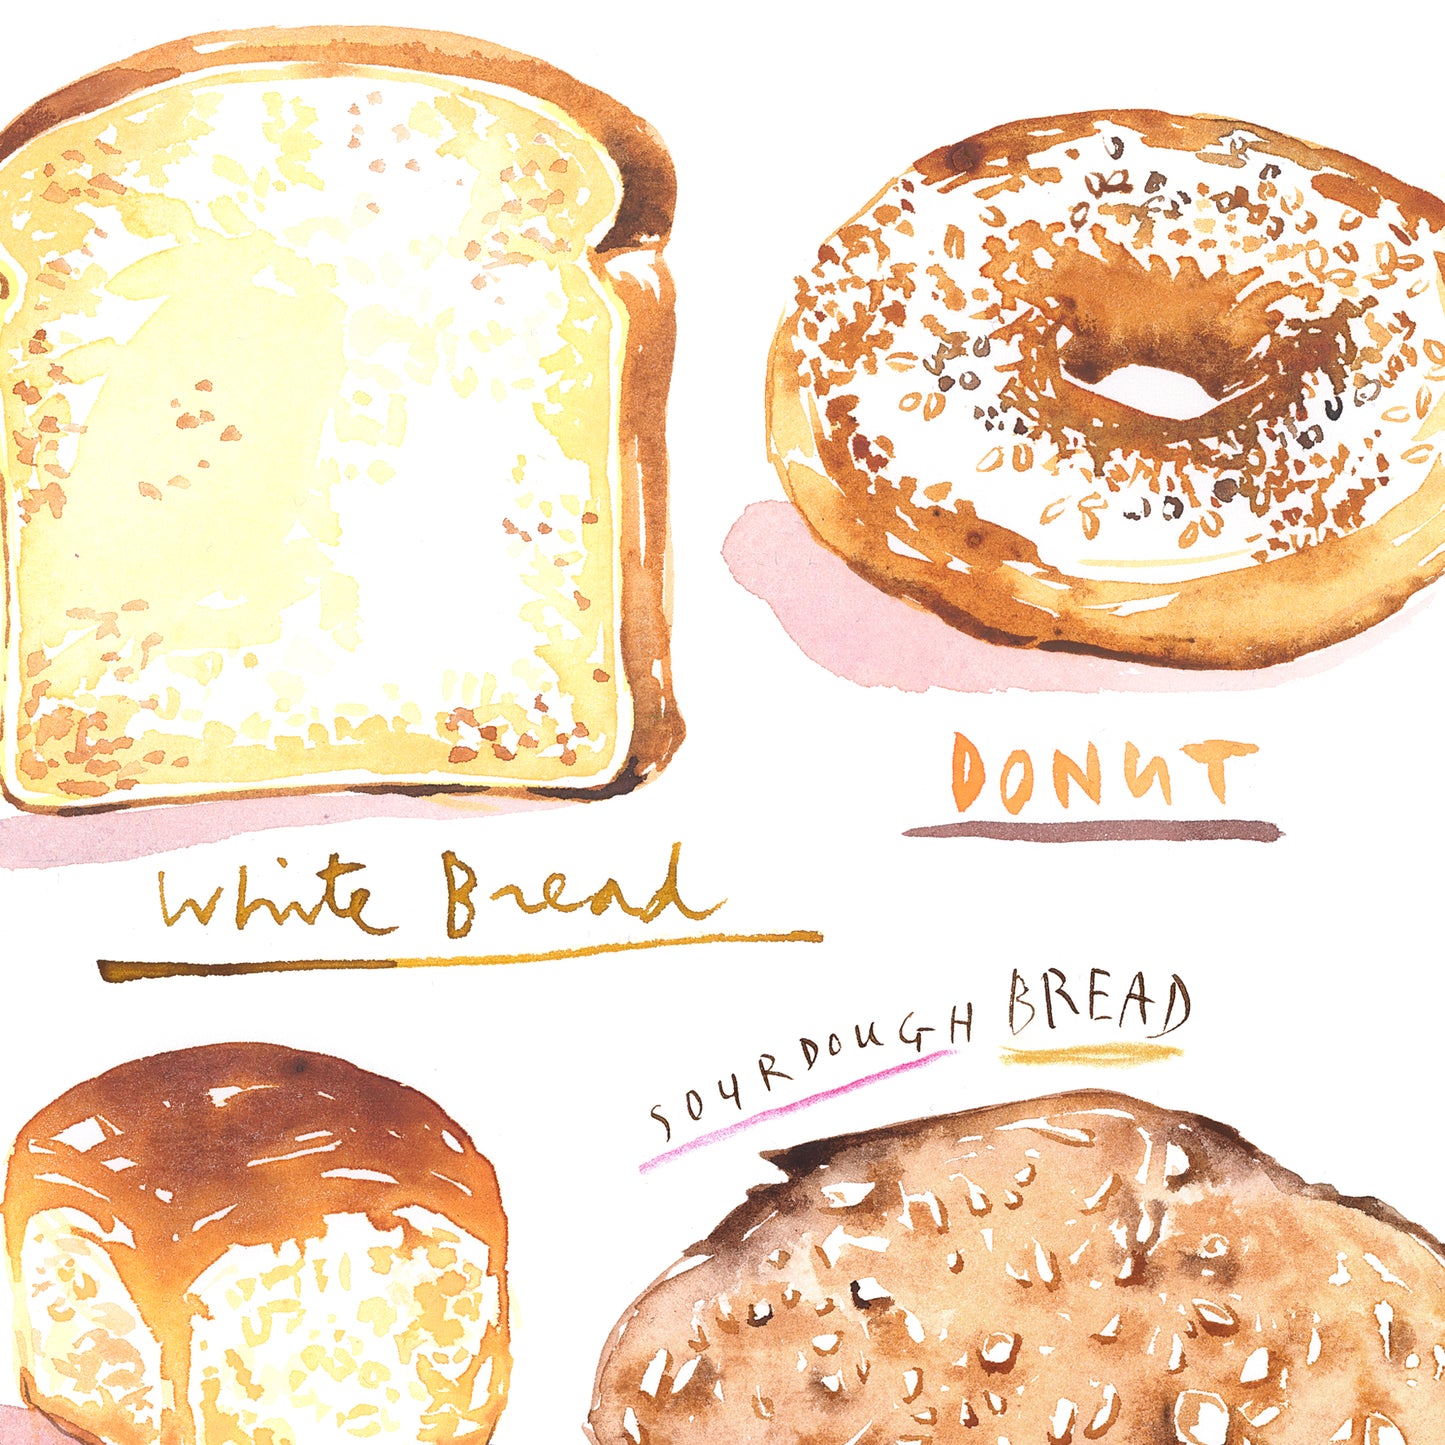 Types of Bread print